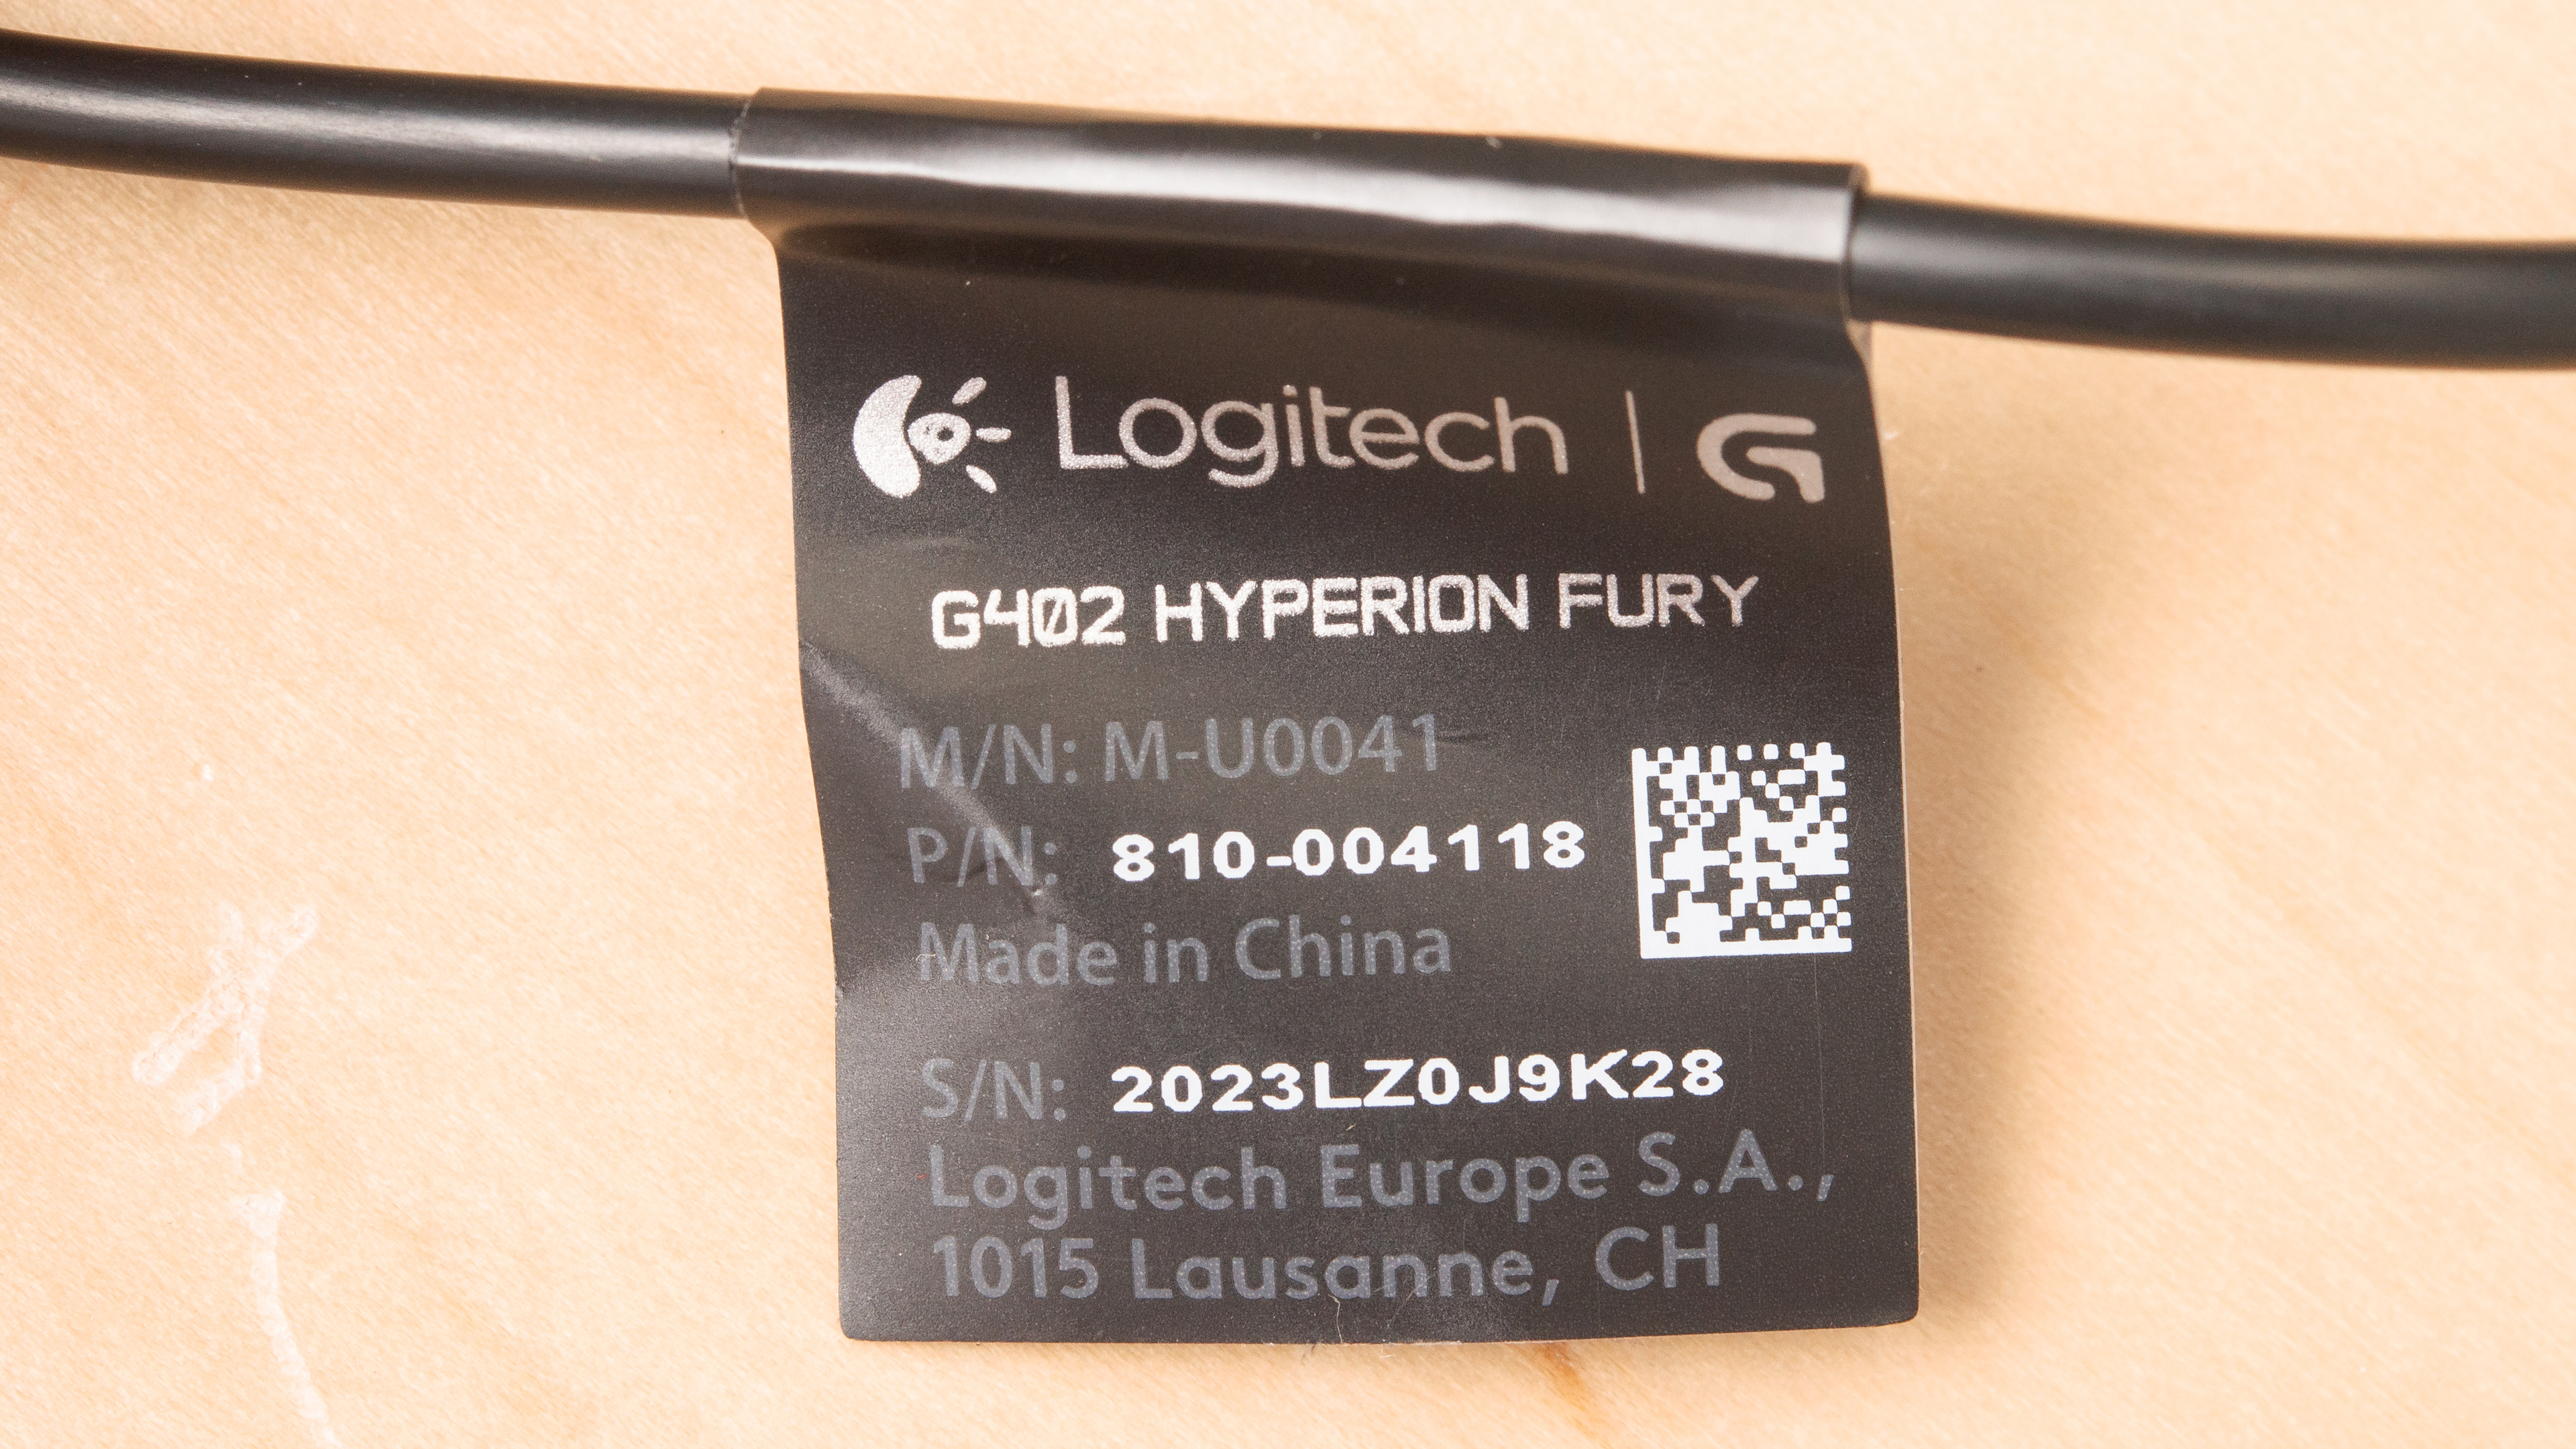 Logitech G402 Hyperion Fury Review 